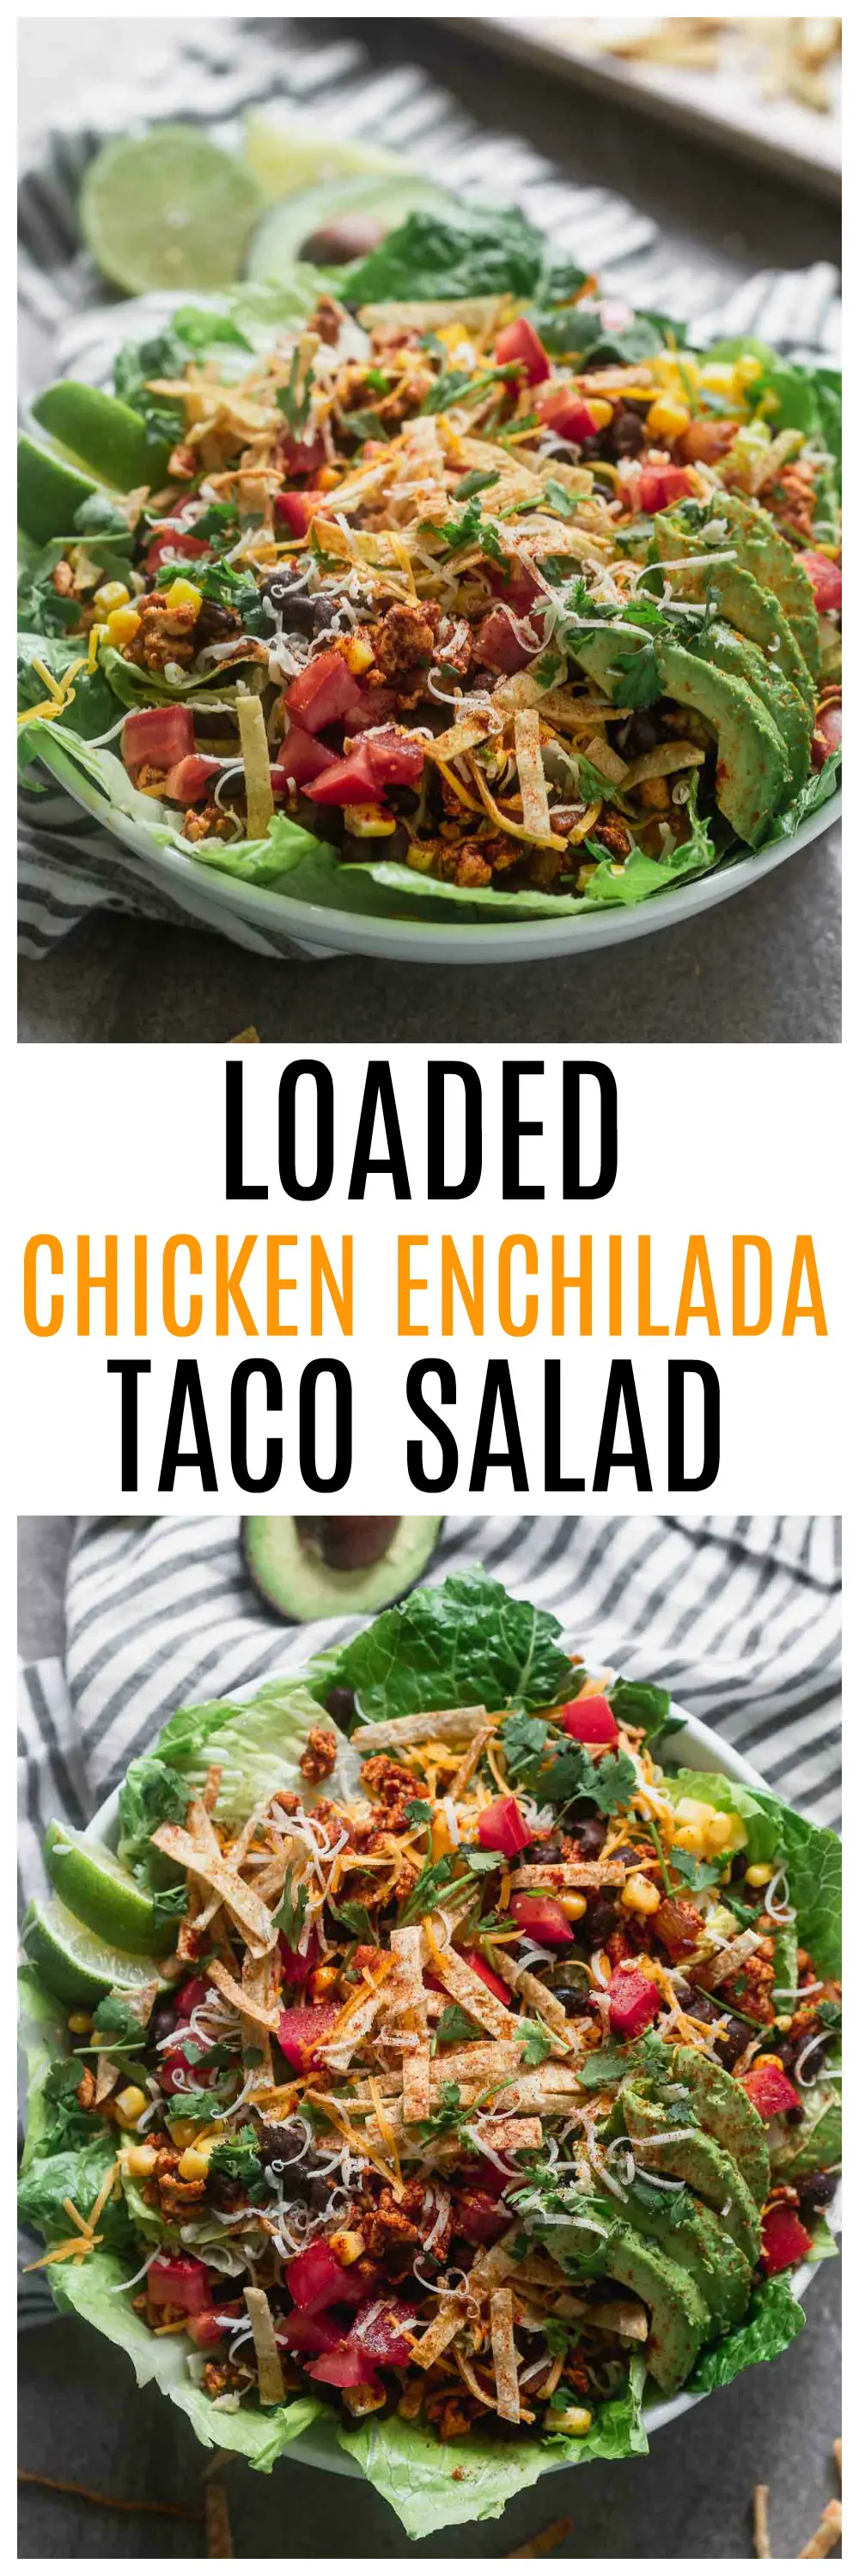 Chicken Enchilada Taco Salad